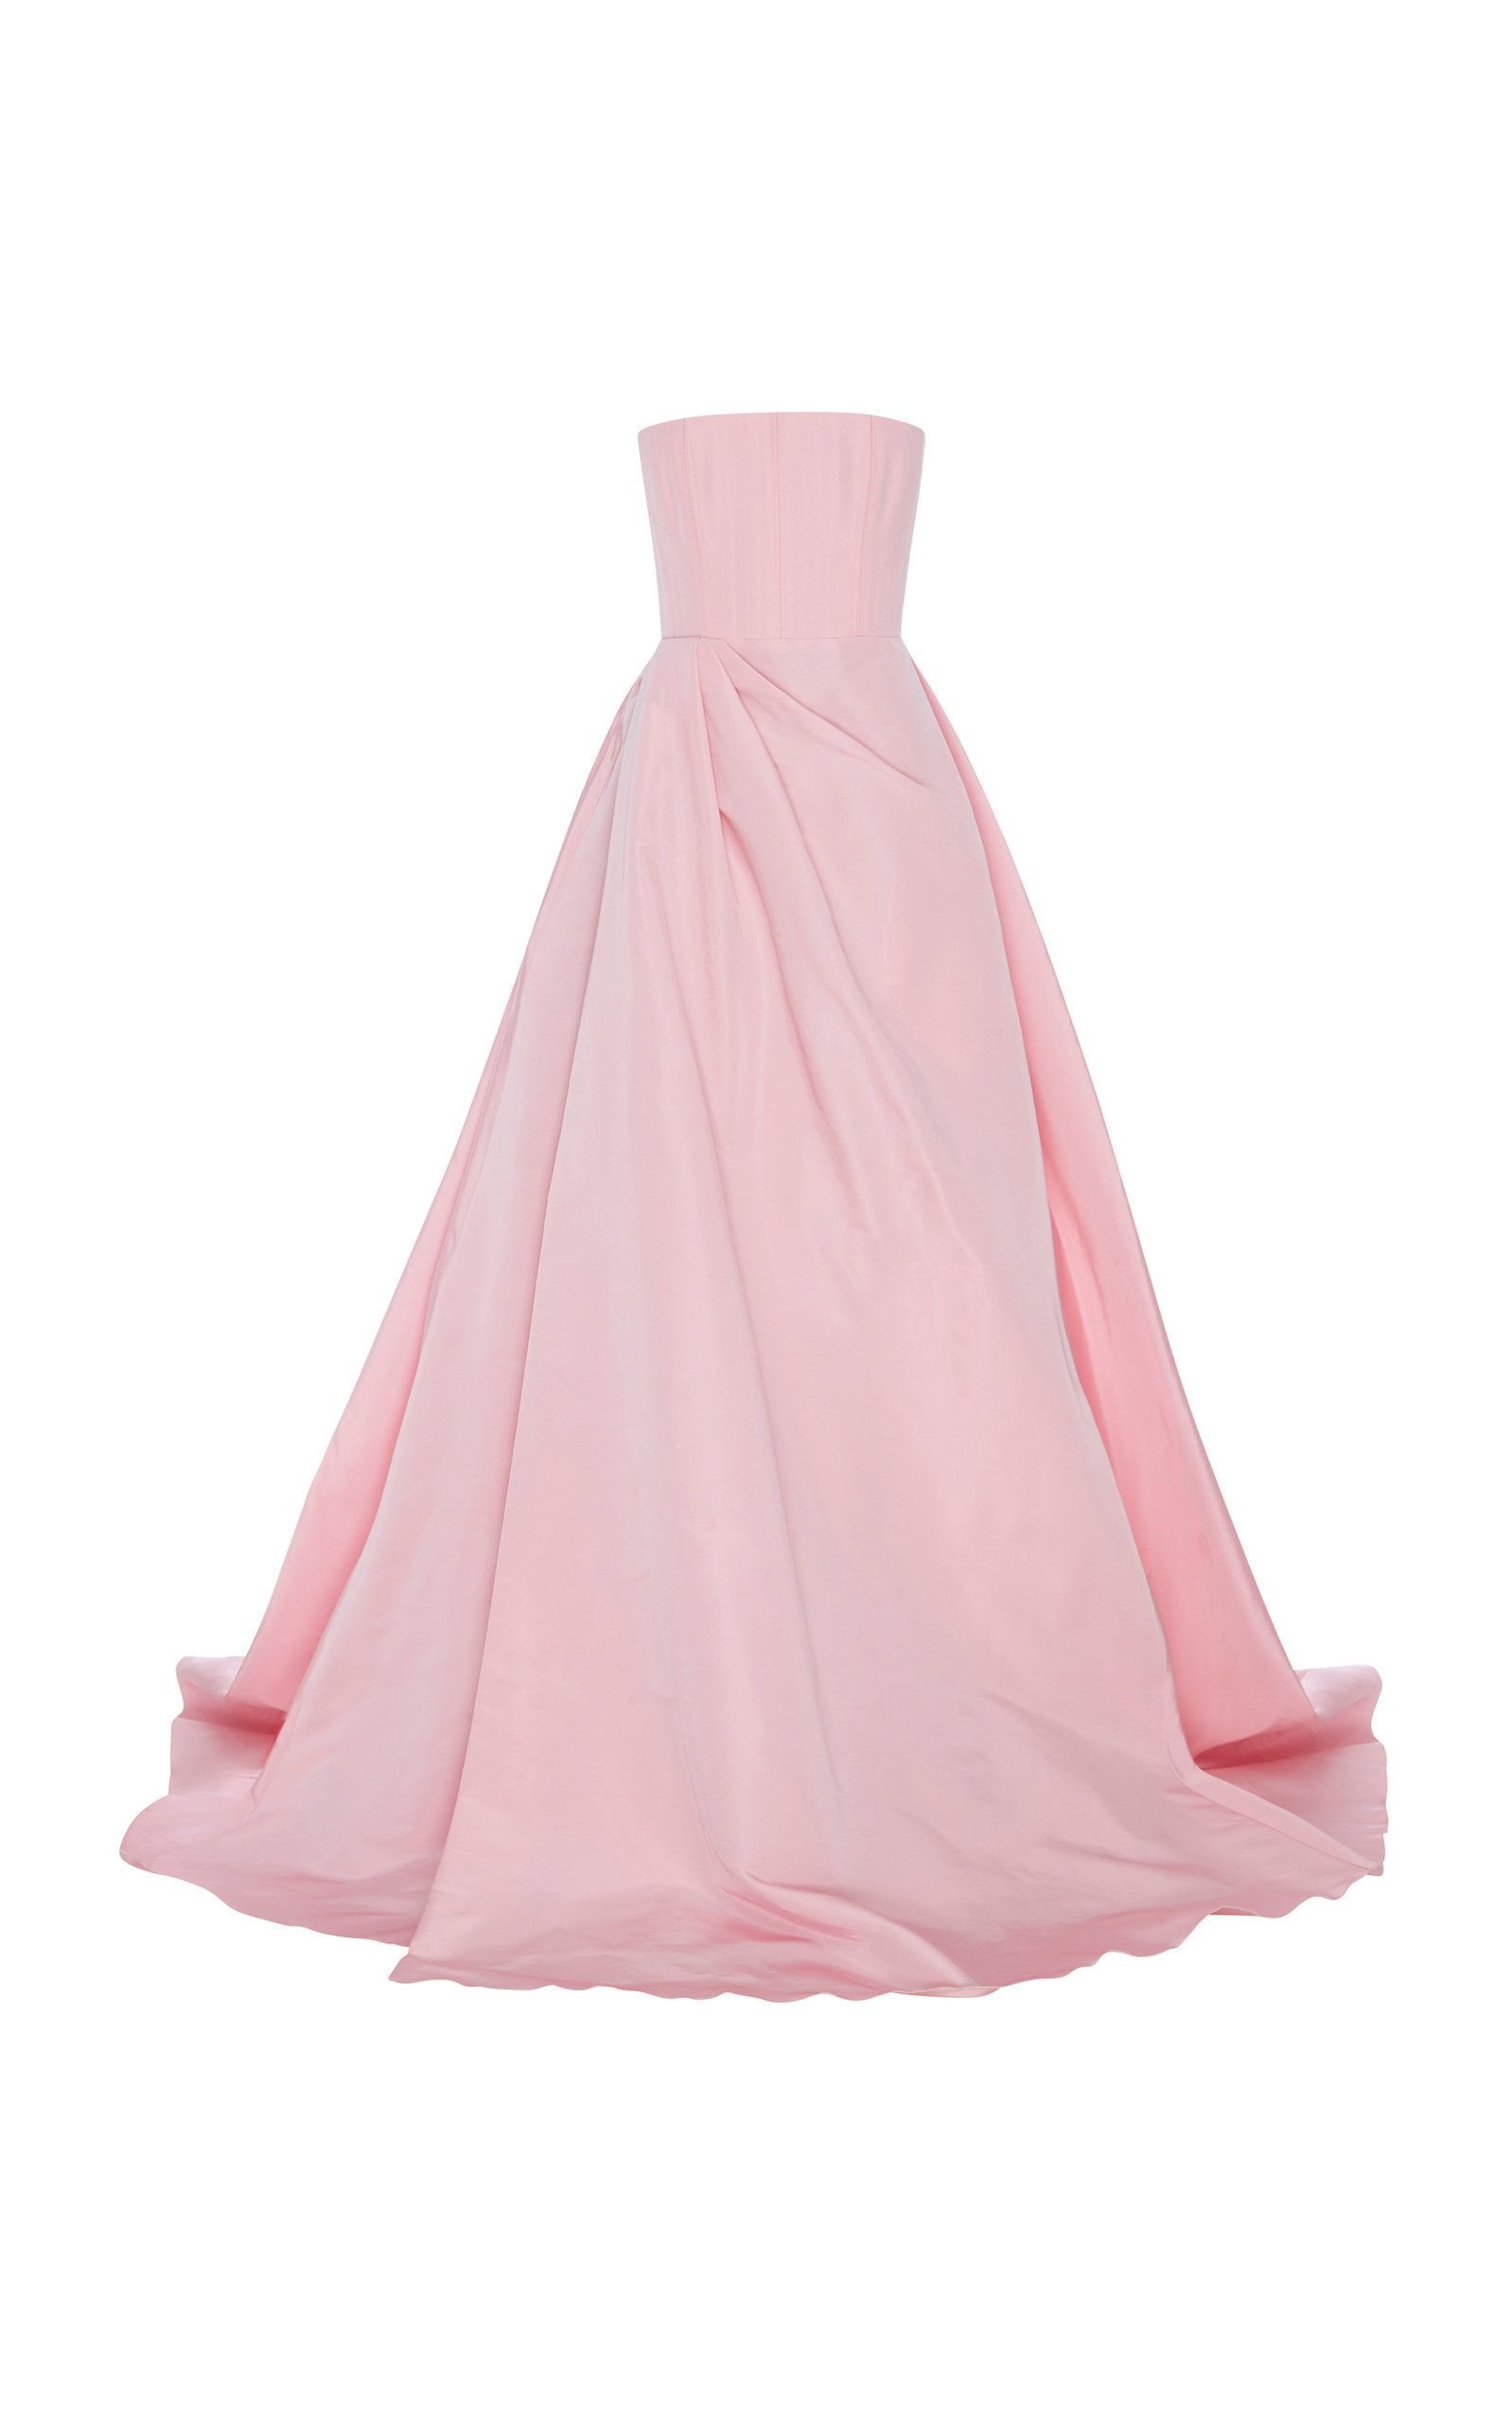 pink wedding gowns